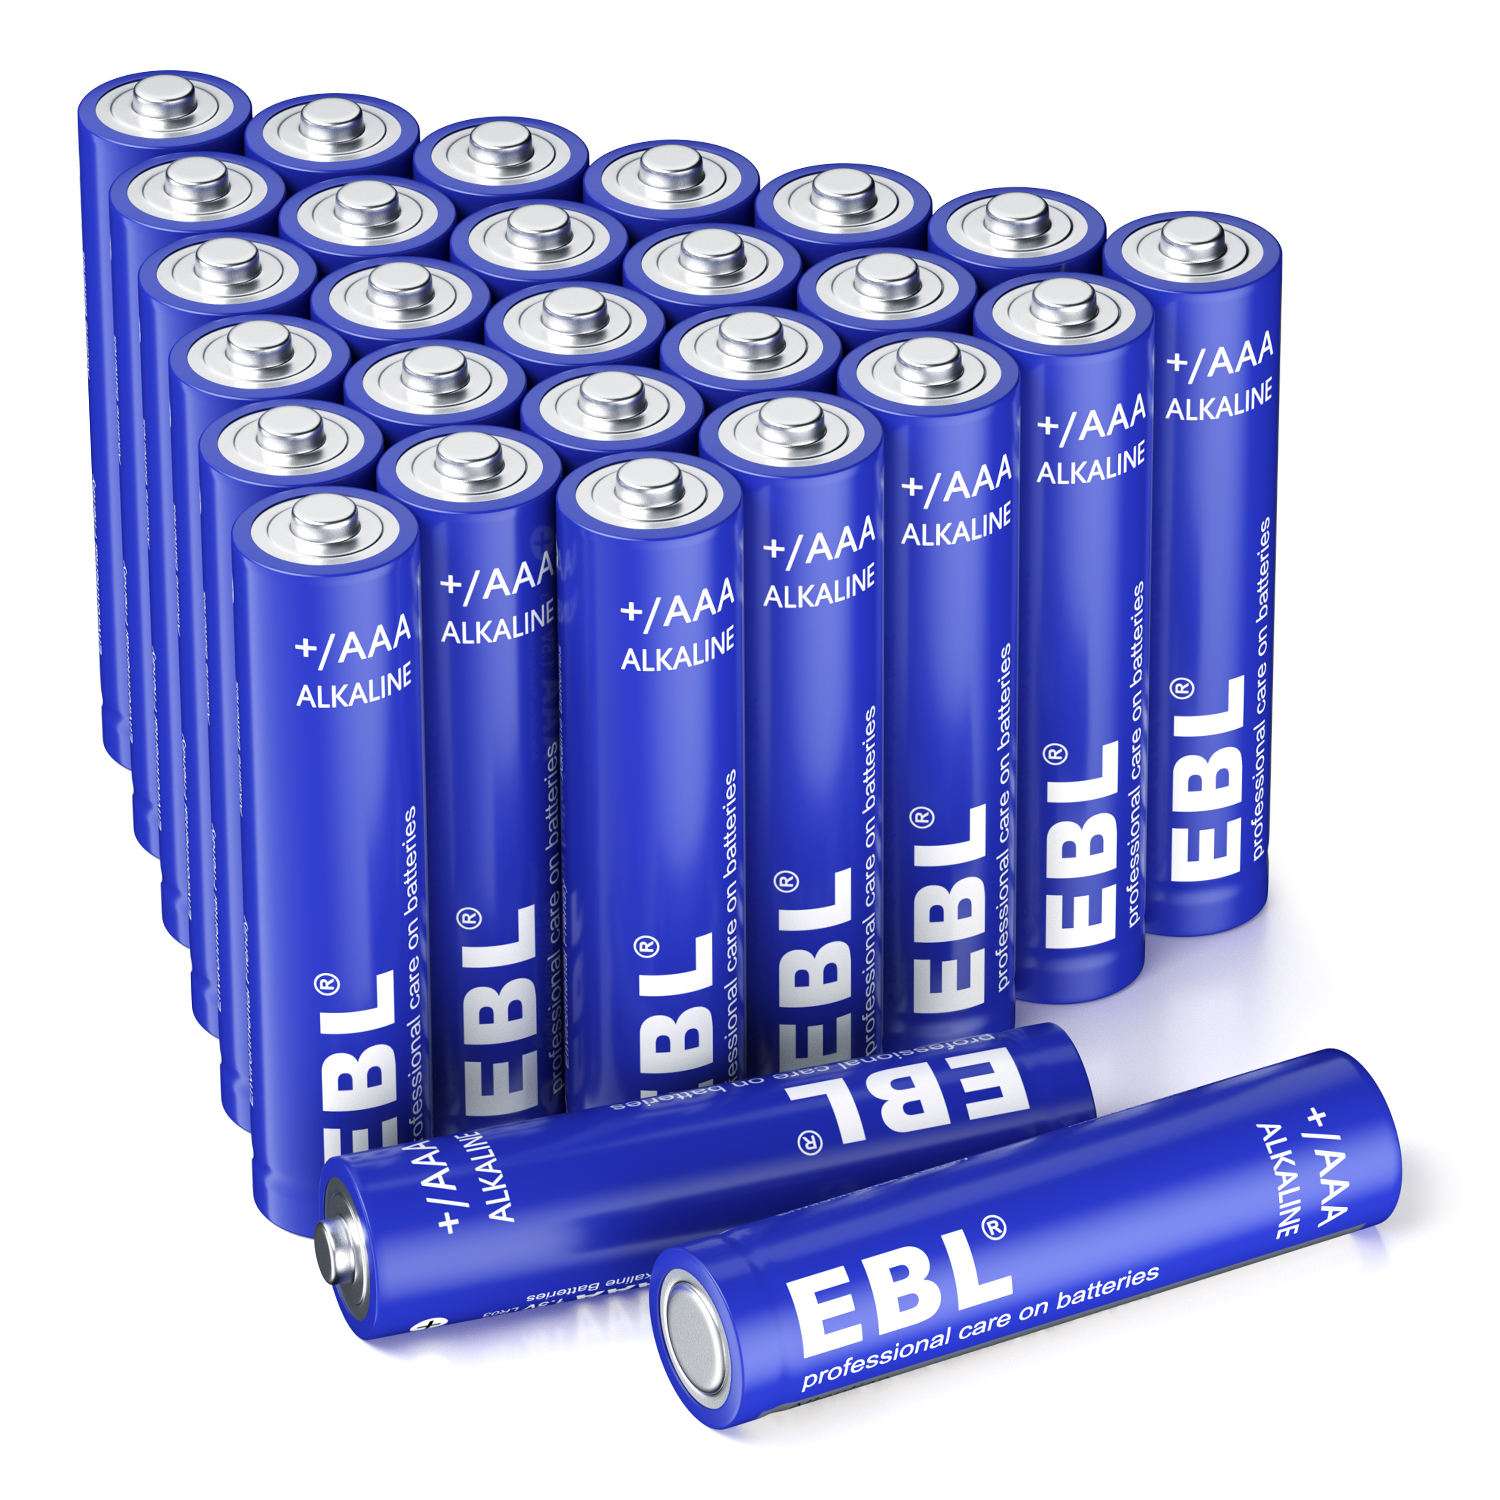 aaa batteries